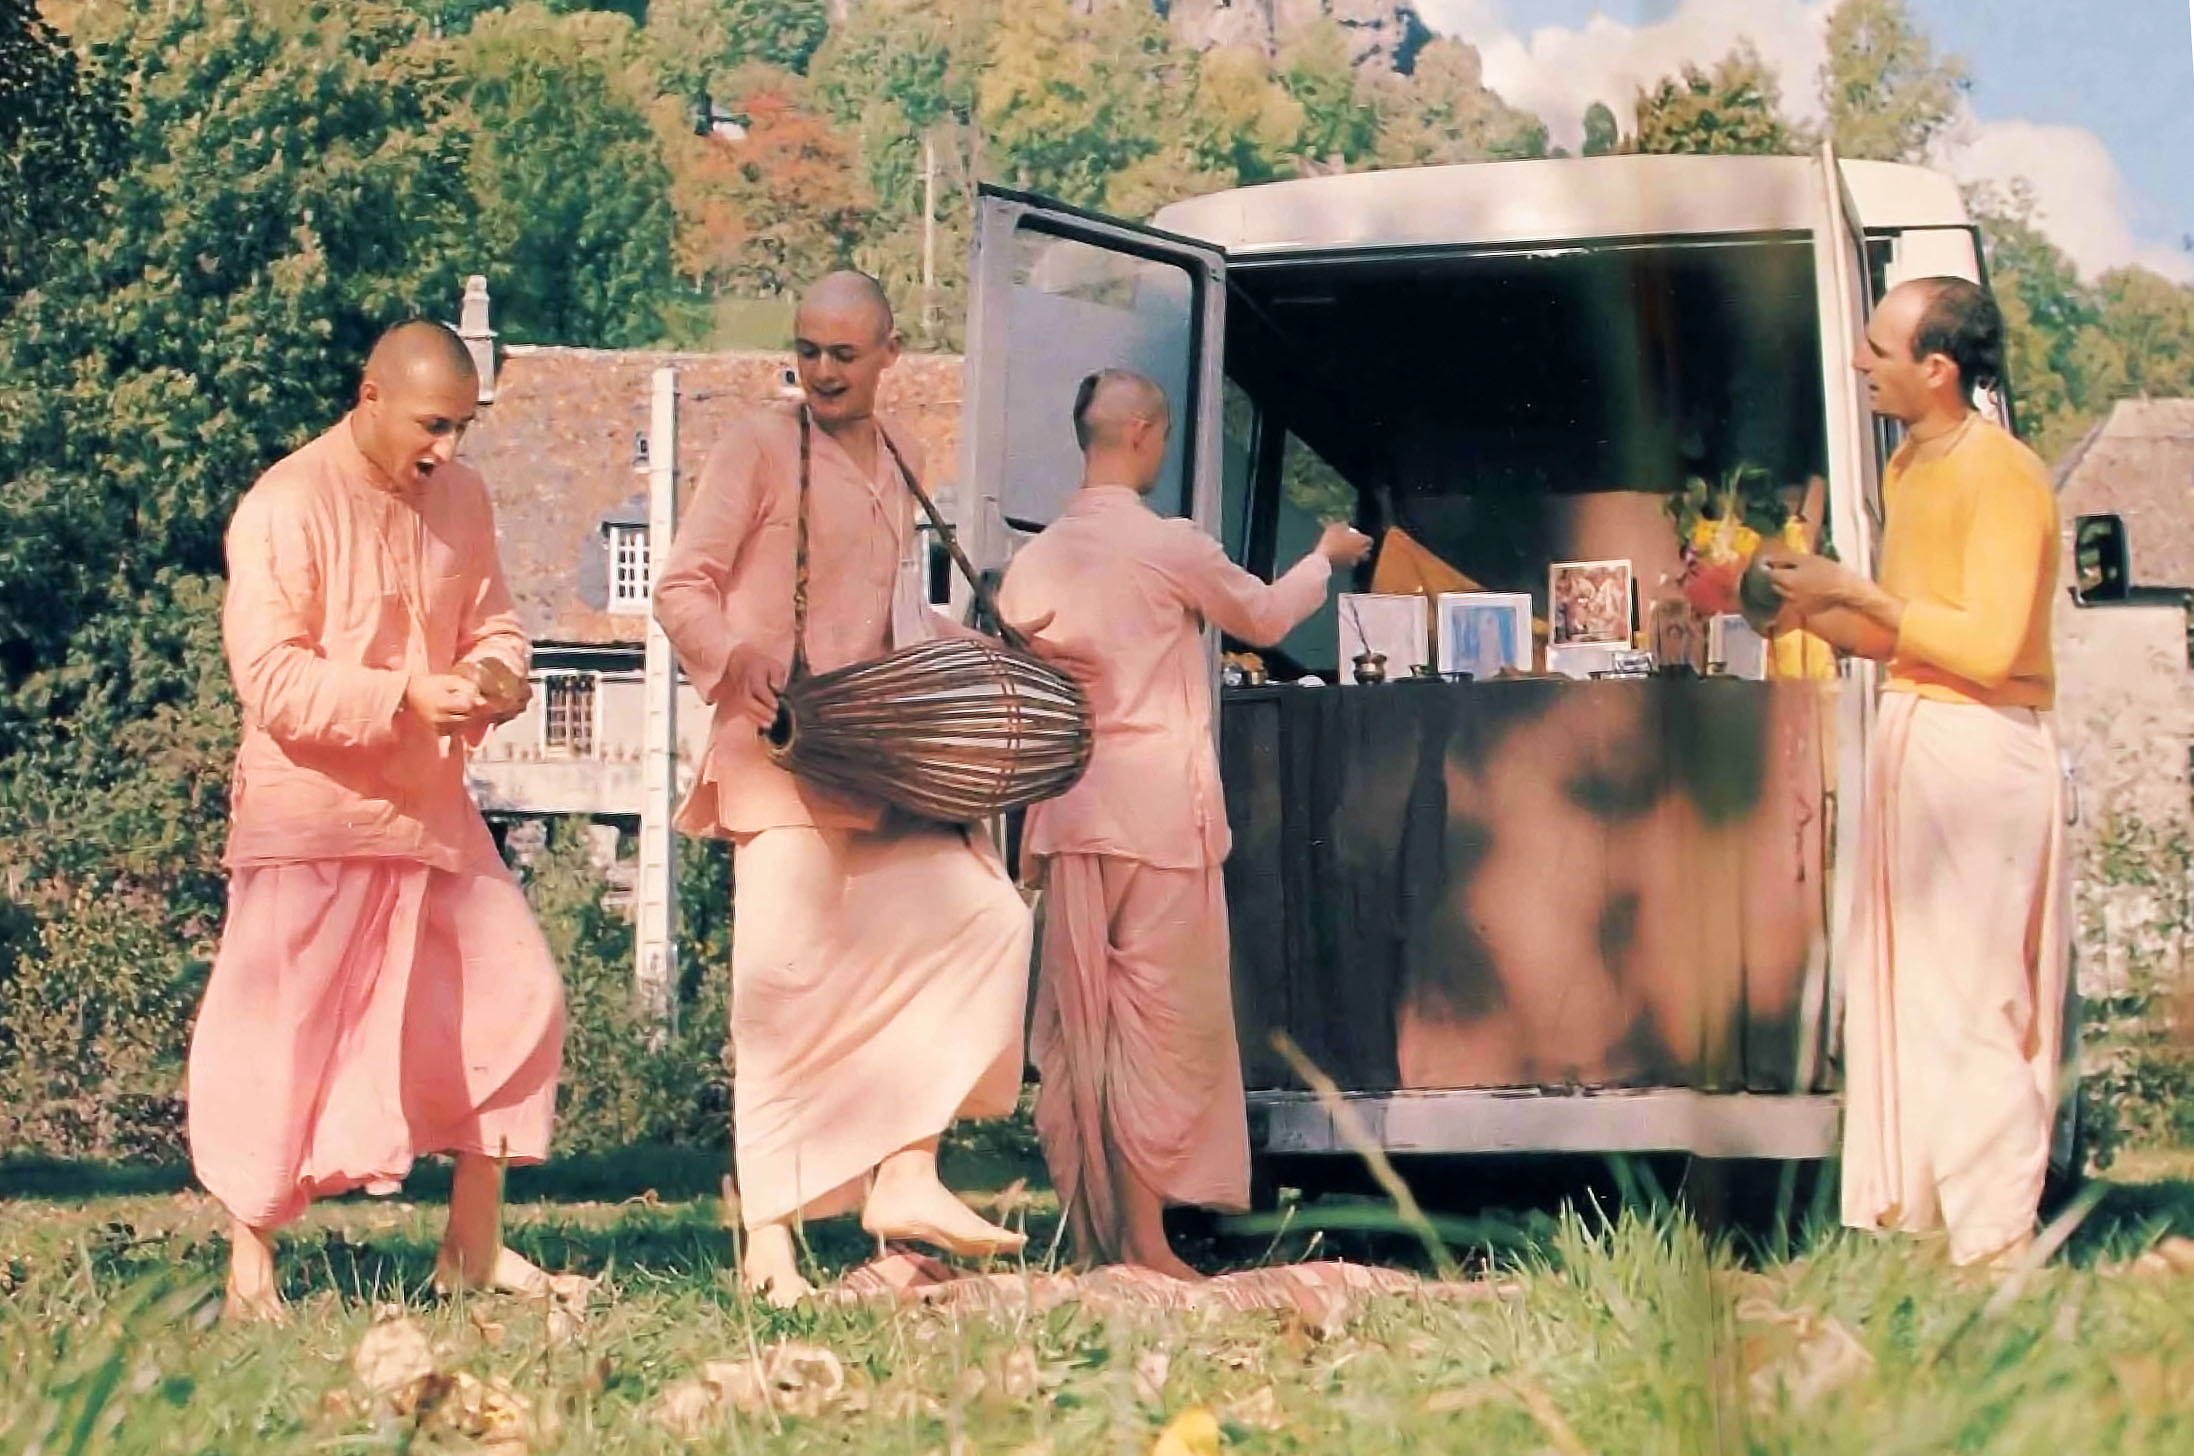 French ISKCON Sankirtan devotees having Kirtan at the back of their sankirtan van